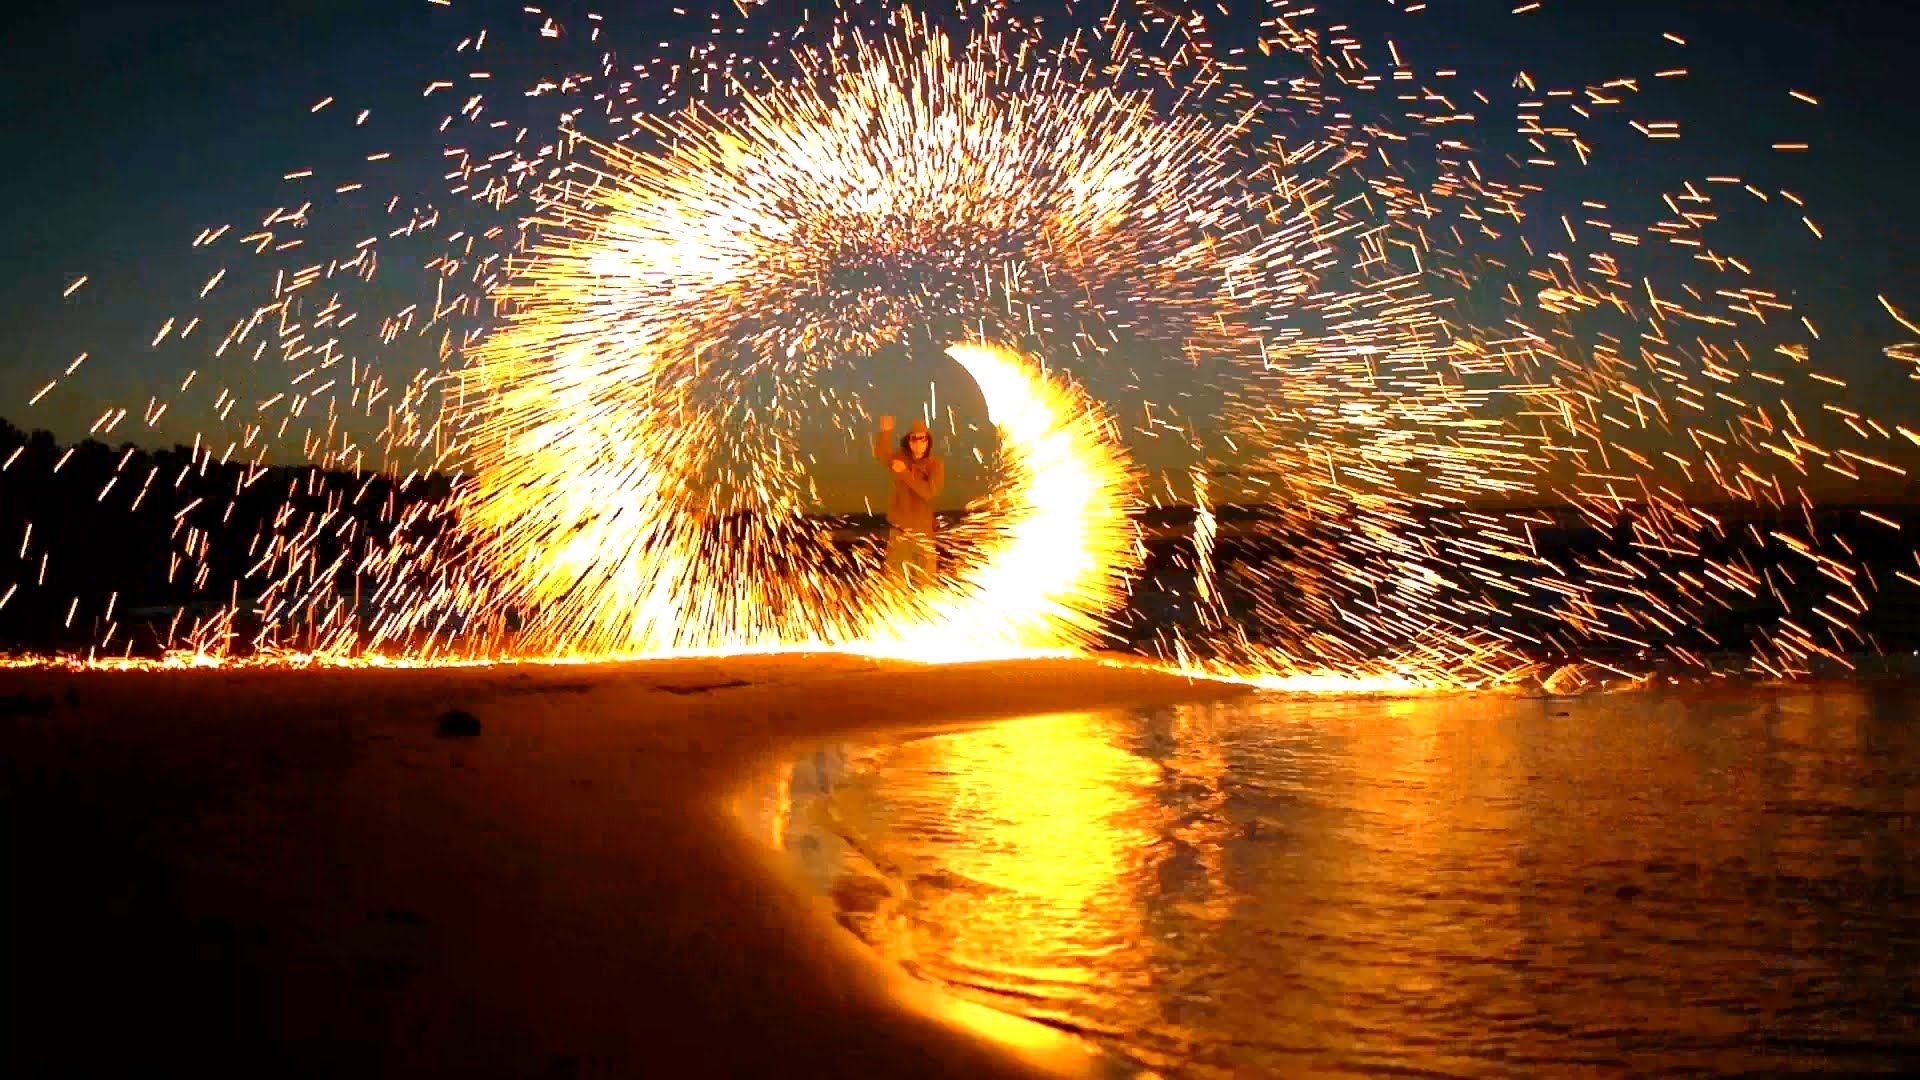 Steel Wool Fireworks on the Beach - YouTube